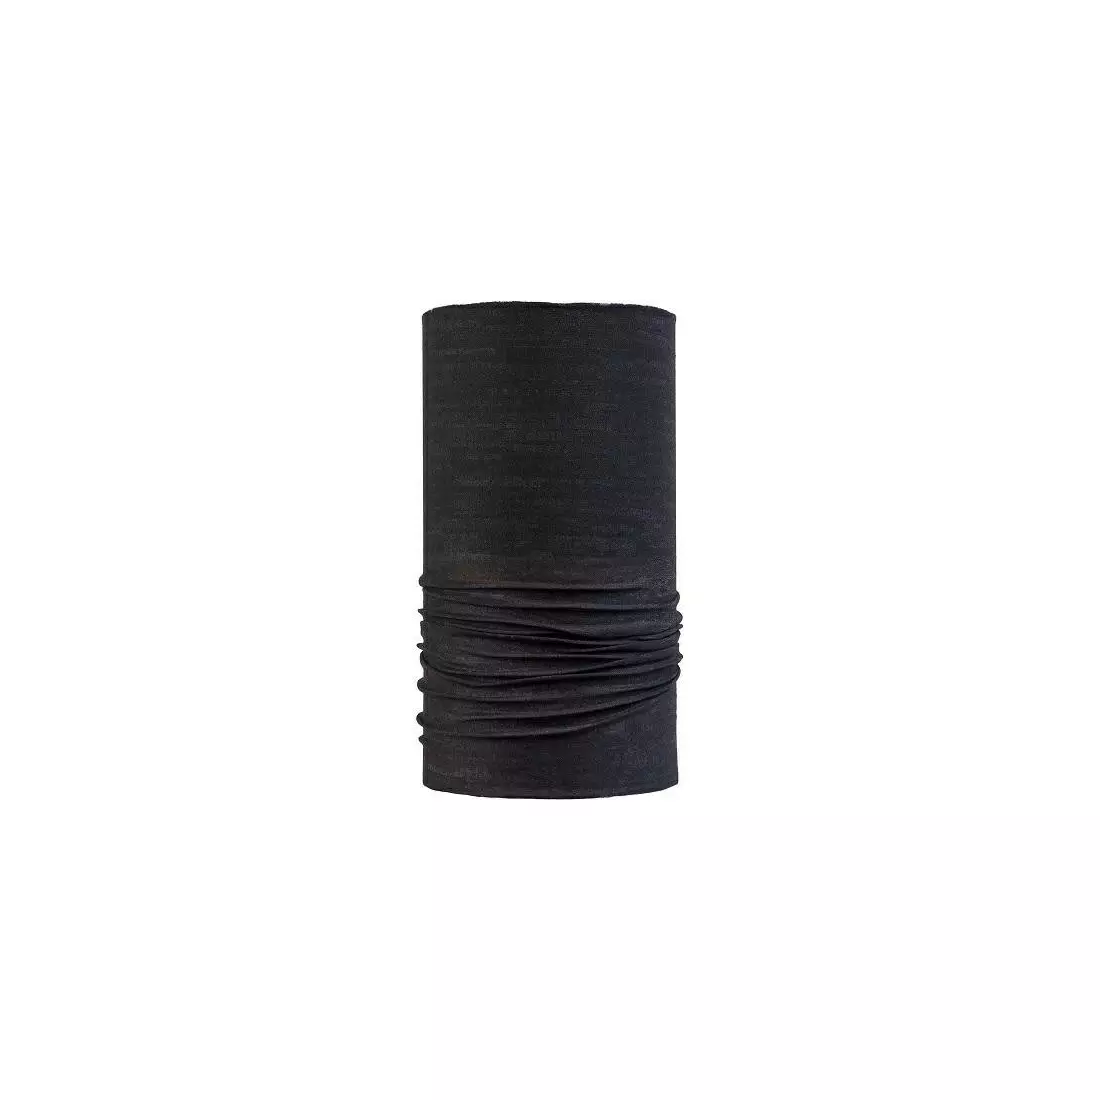 CAIRN Multifunctional scarf MALAWI TUBE black